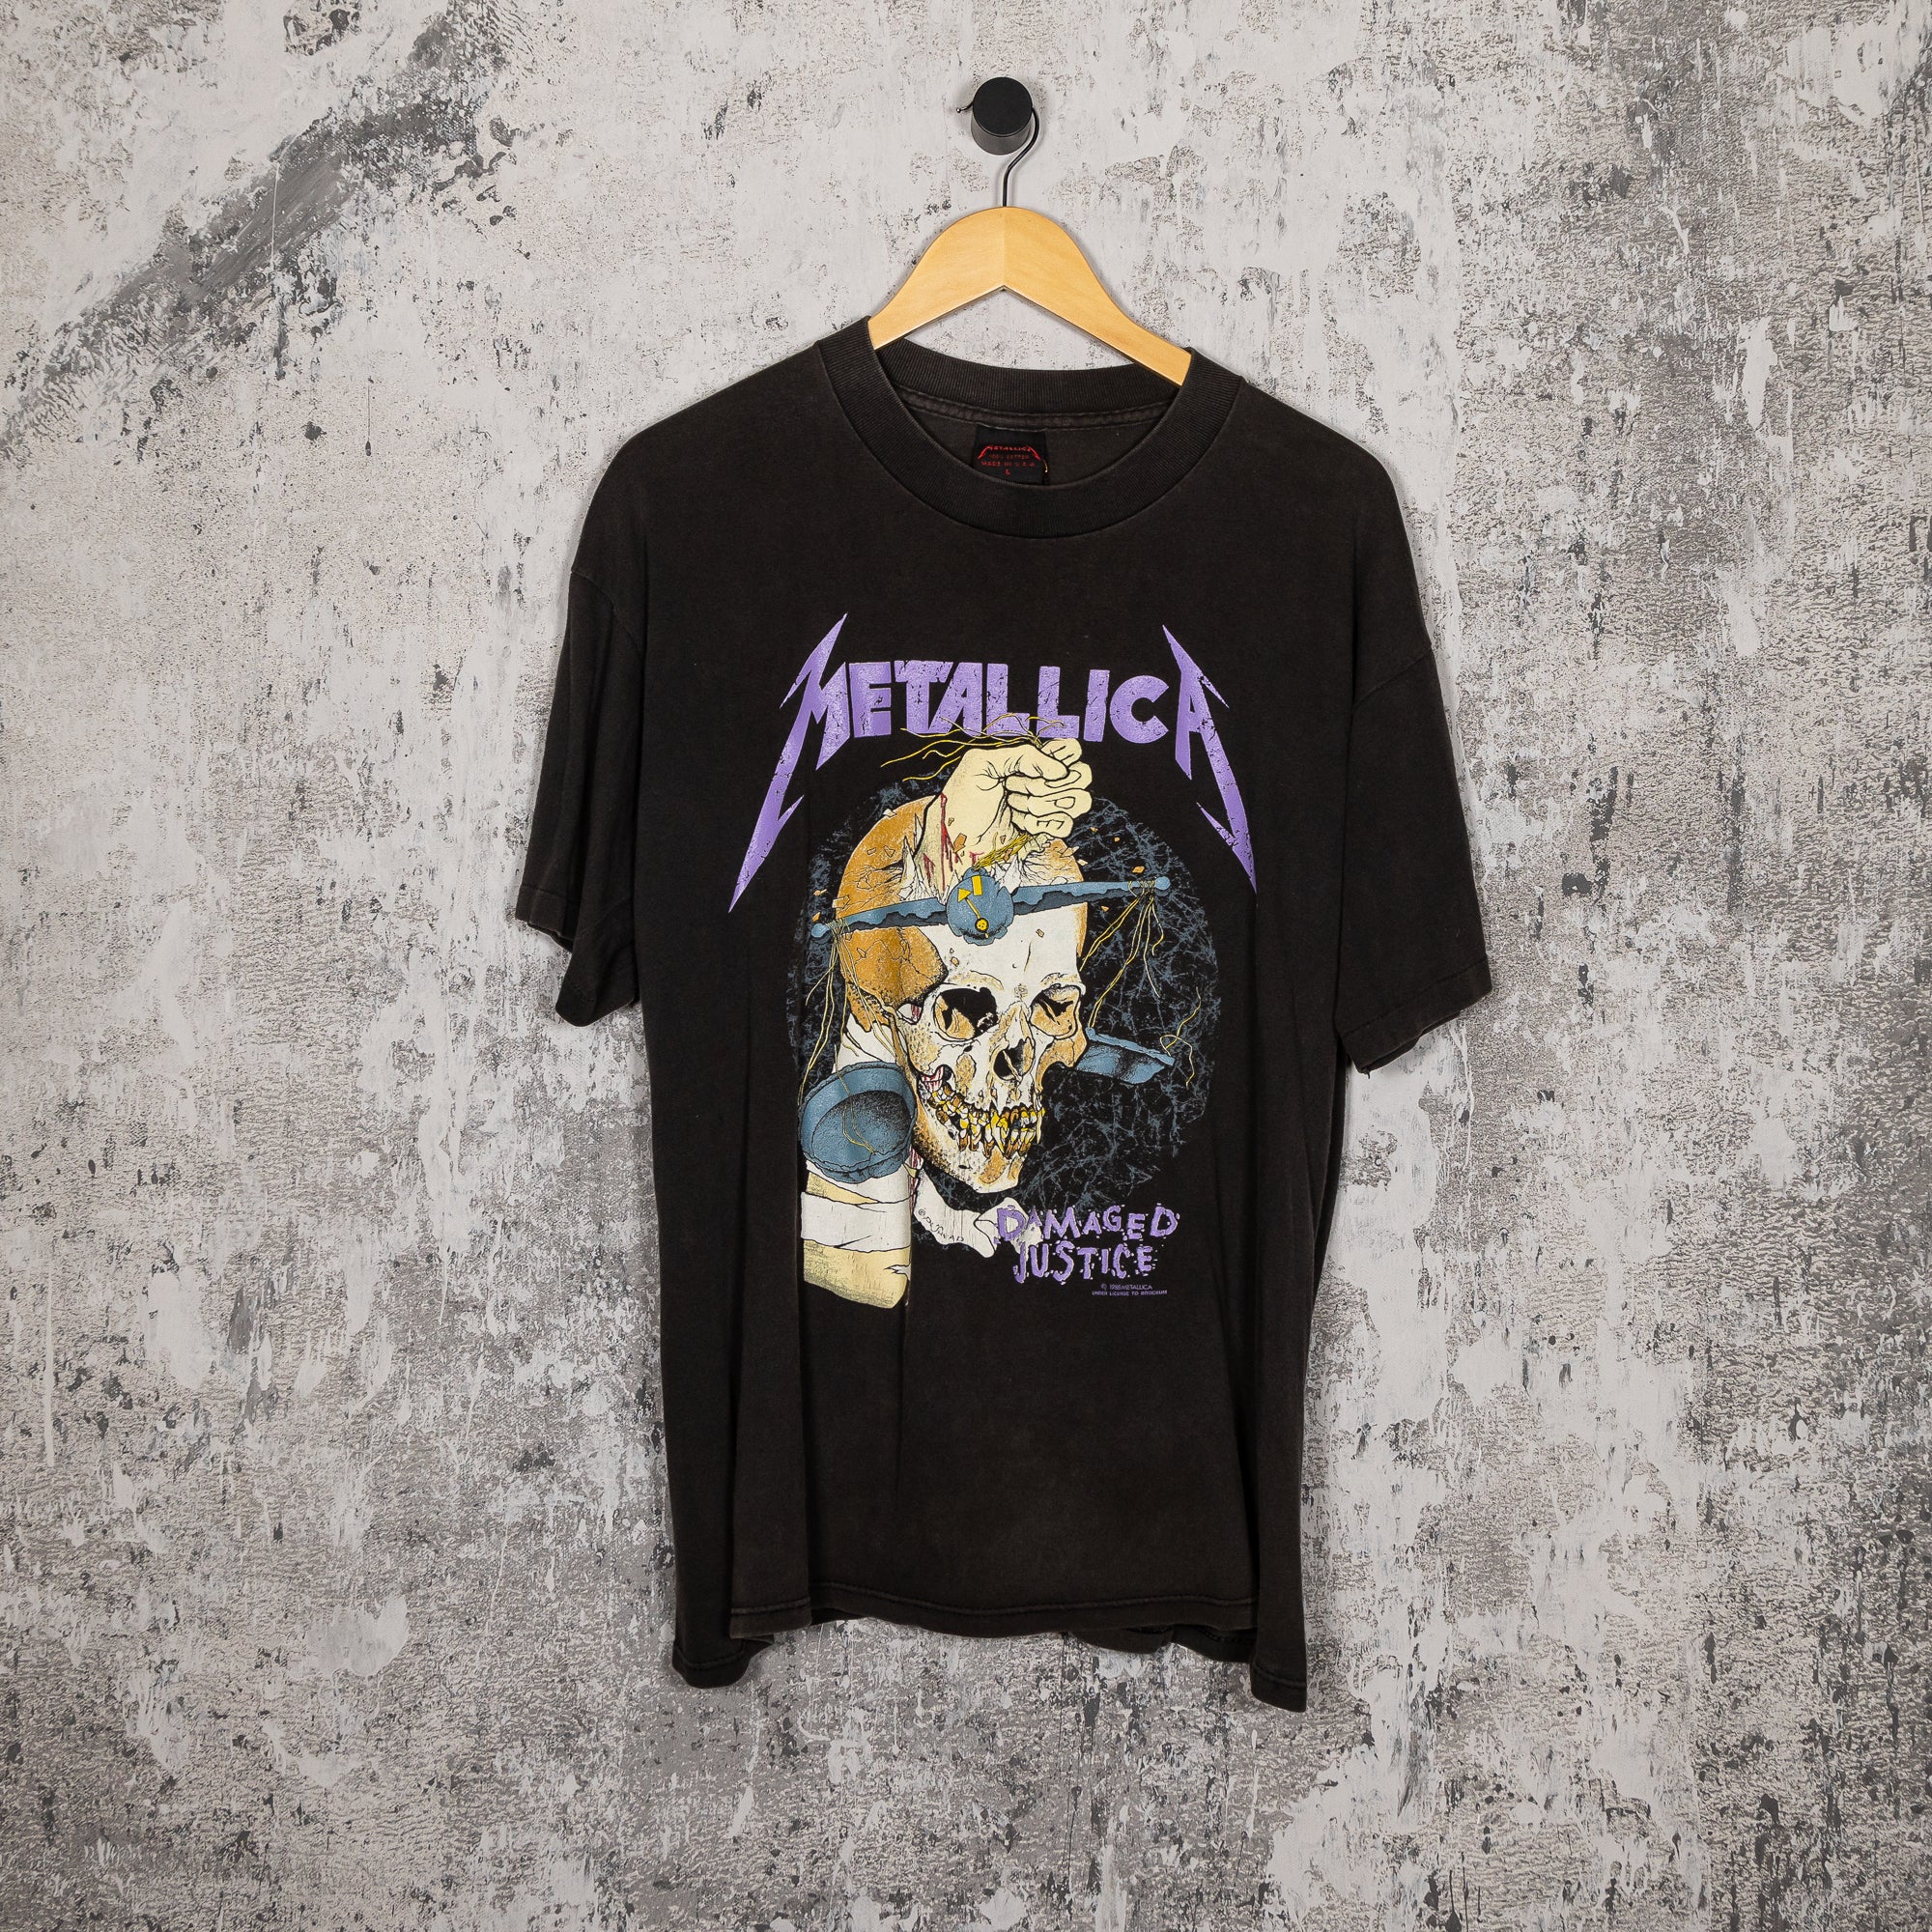 FADEDBLK - Metallica Damaged Justice 1988 - Tee - Metallica Damaged Justice 1988